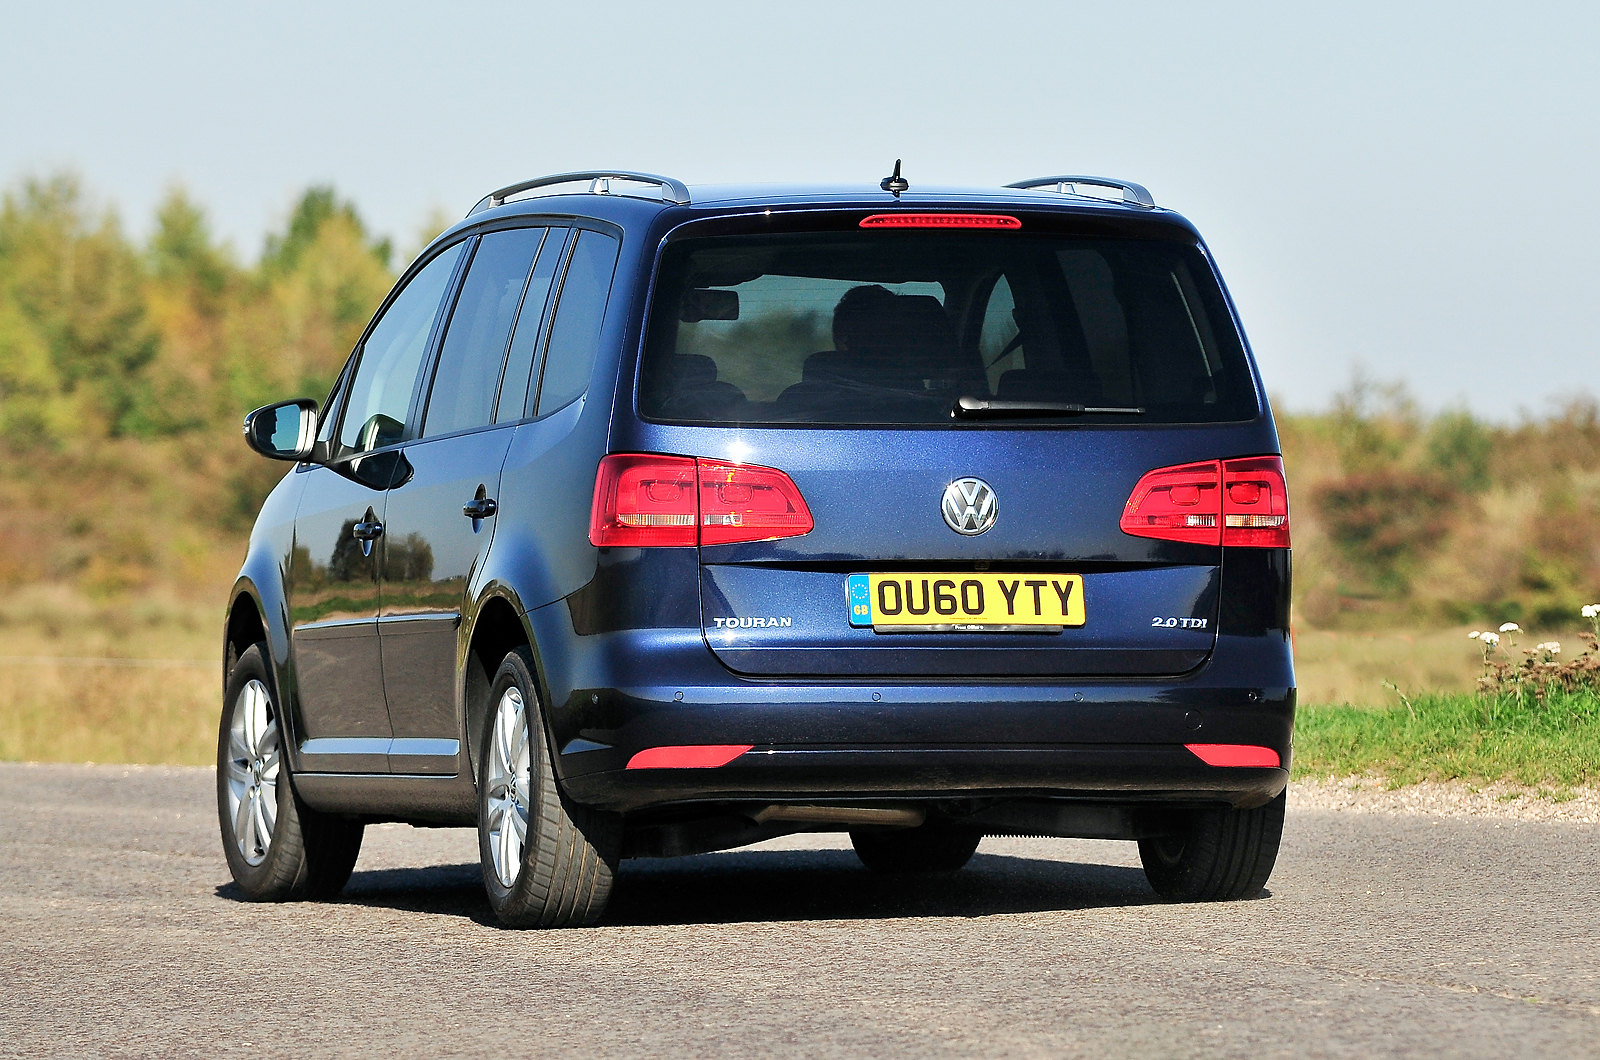 Volkswagen Touran (2010 - 2015) used car review, Car review